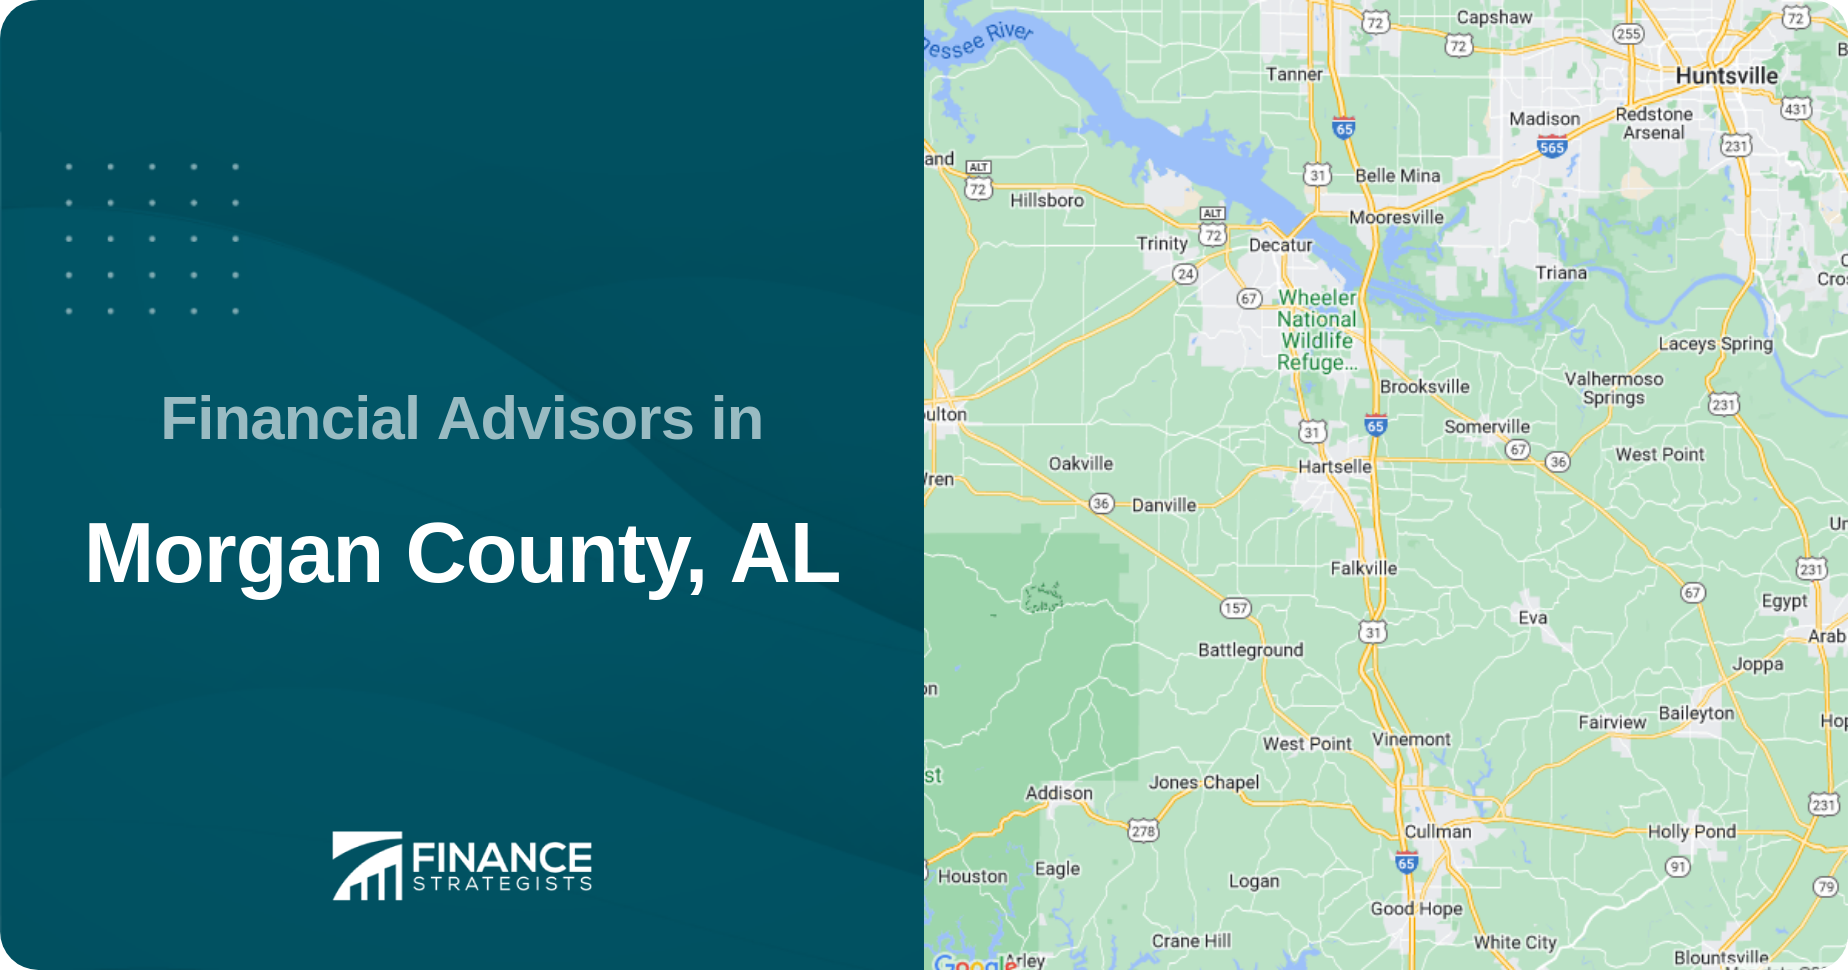 Financial Advisors in Morgan County, AL